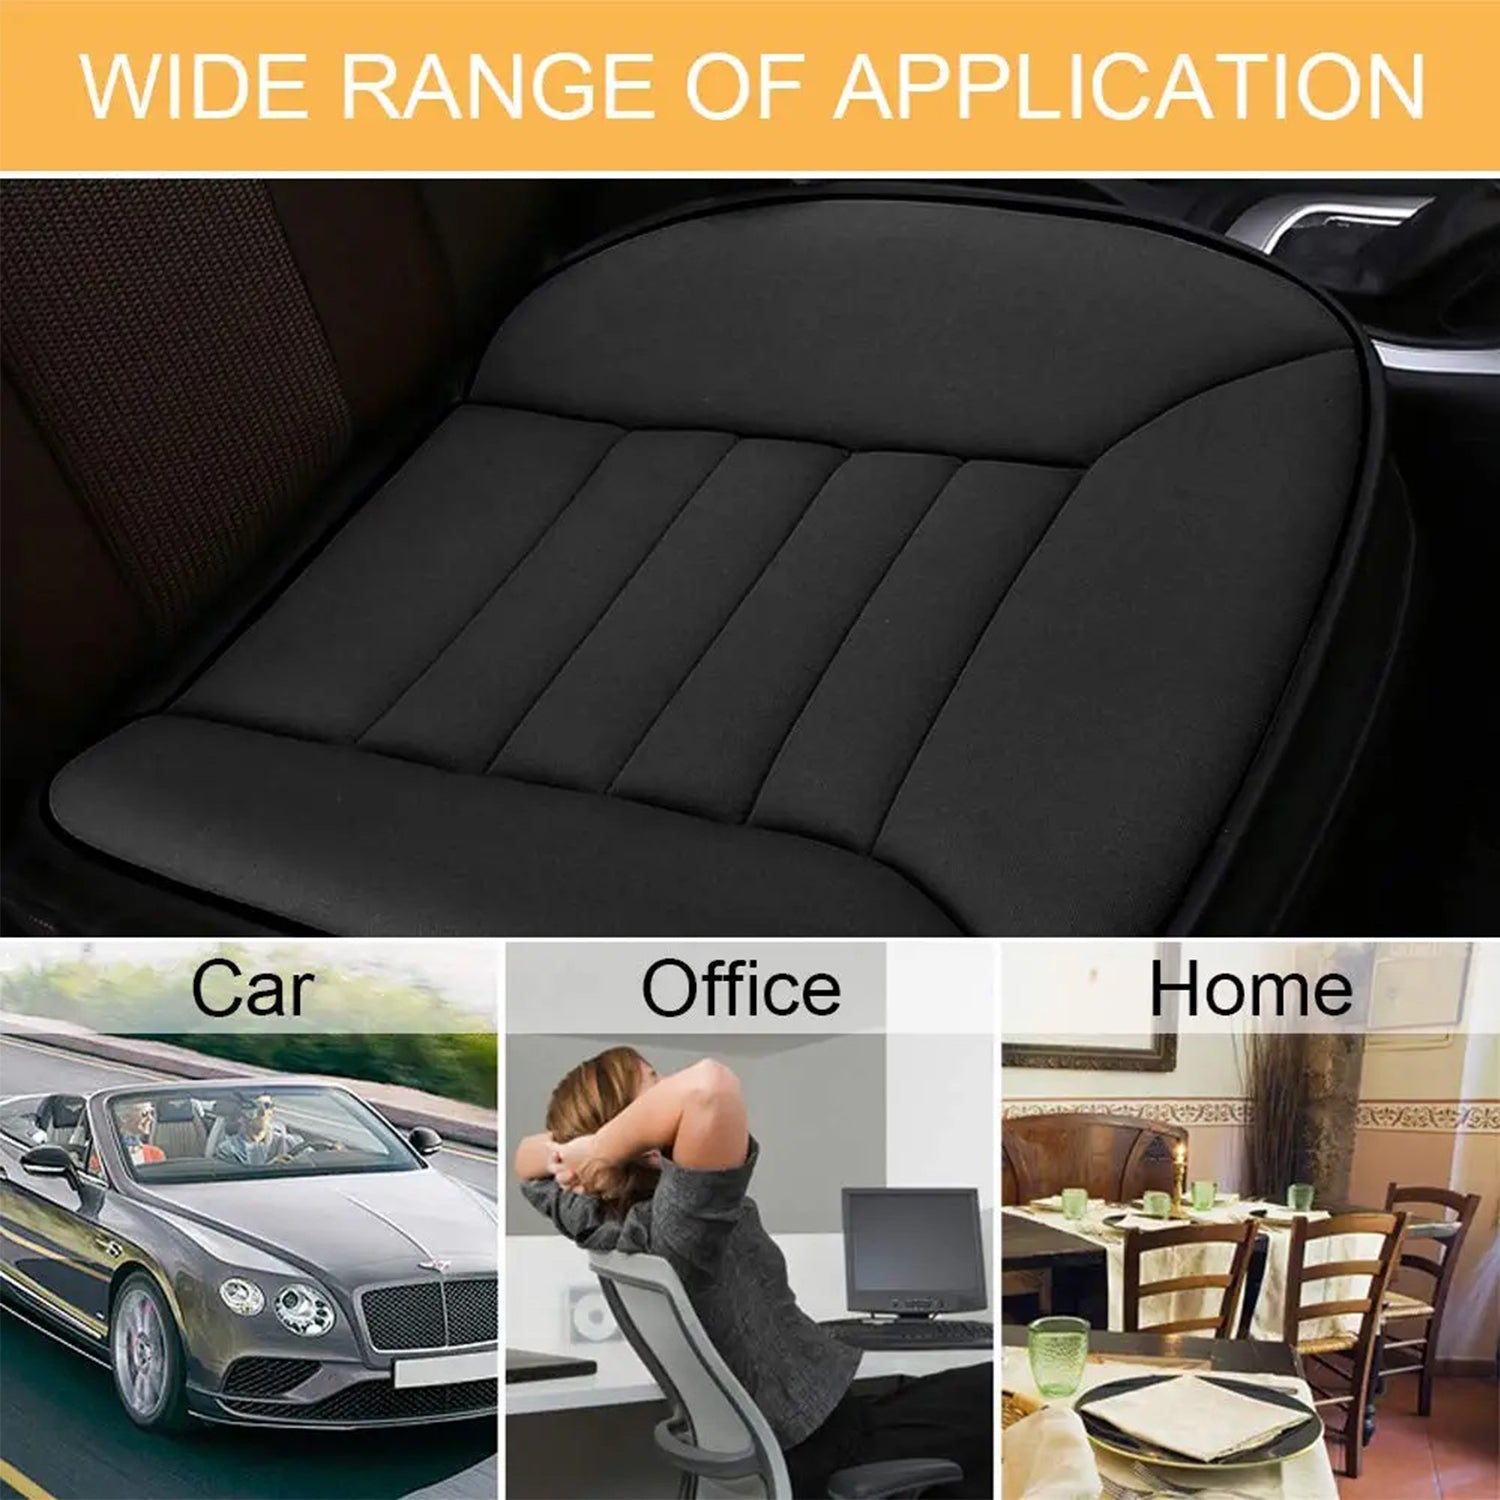 Car Seat Cushion with 1.2inch Comfort Memory Foam, Custom-Fit For Car, Seat Cushion for Car and Office Chair DLMC247